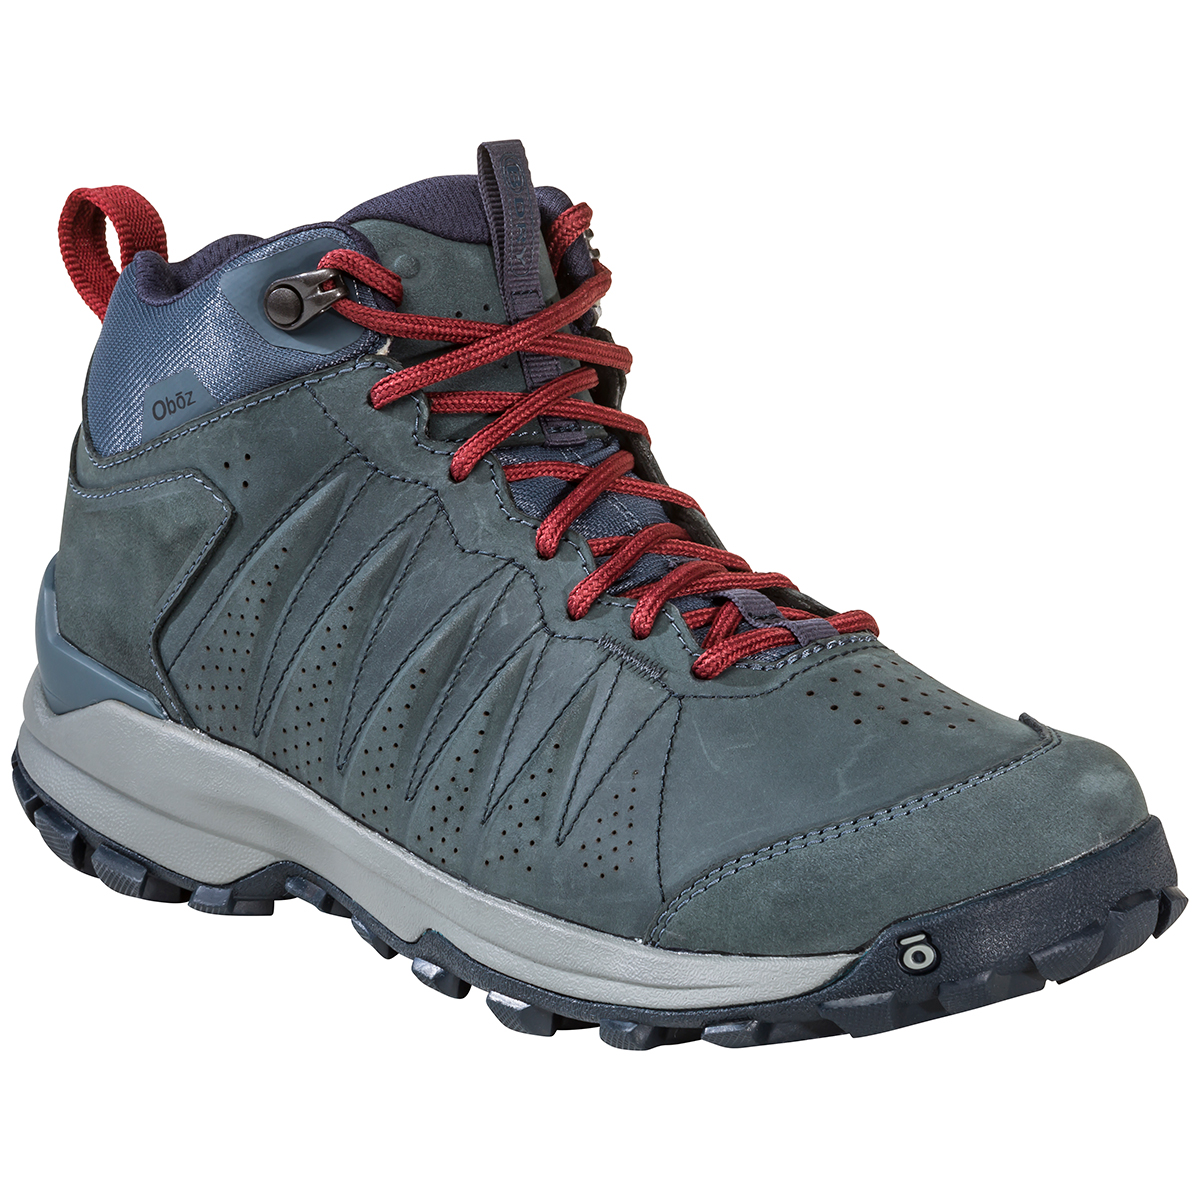 Oboz Women's Sypes Mid Leather B-Dry Hiking Shoe - Size 11